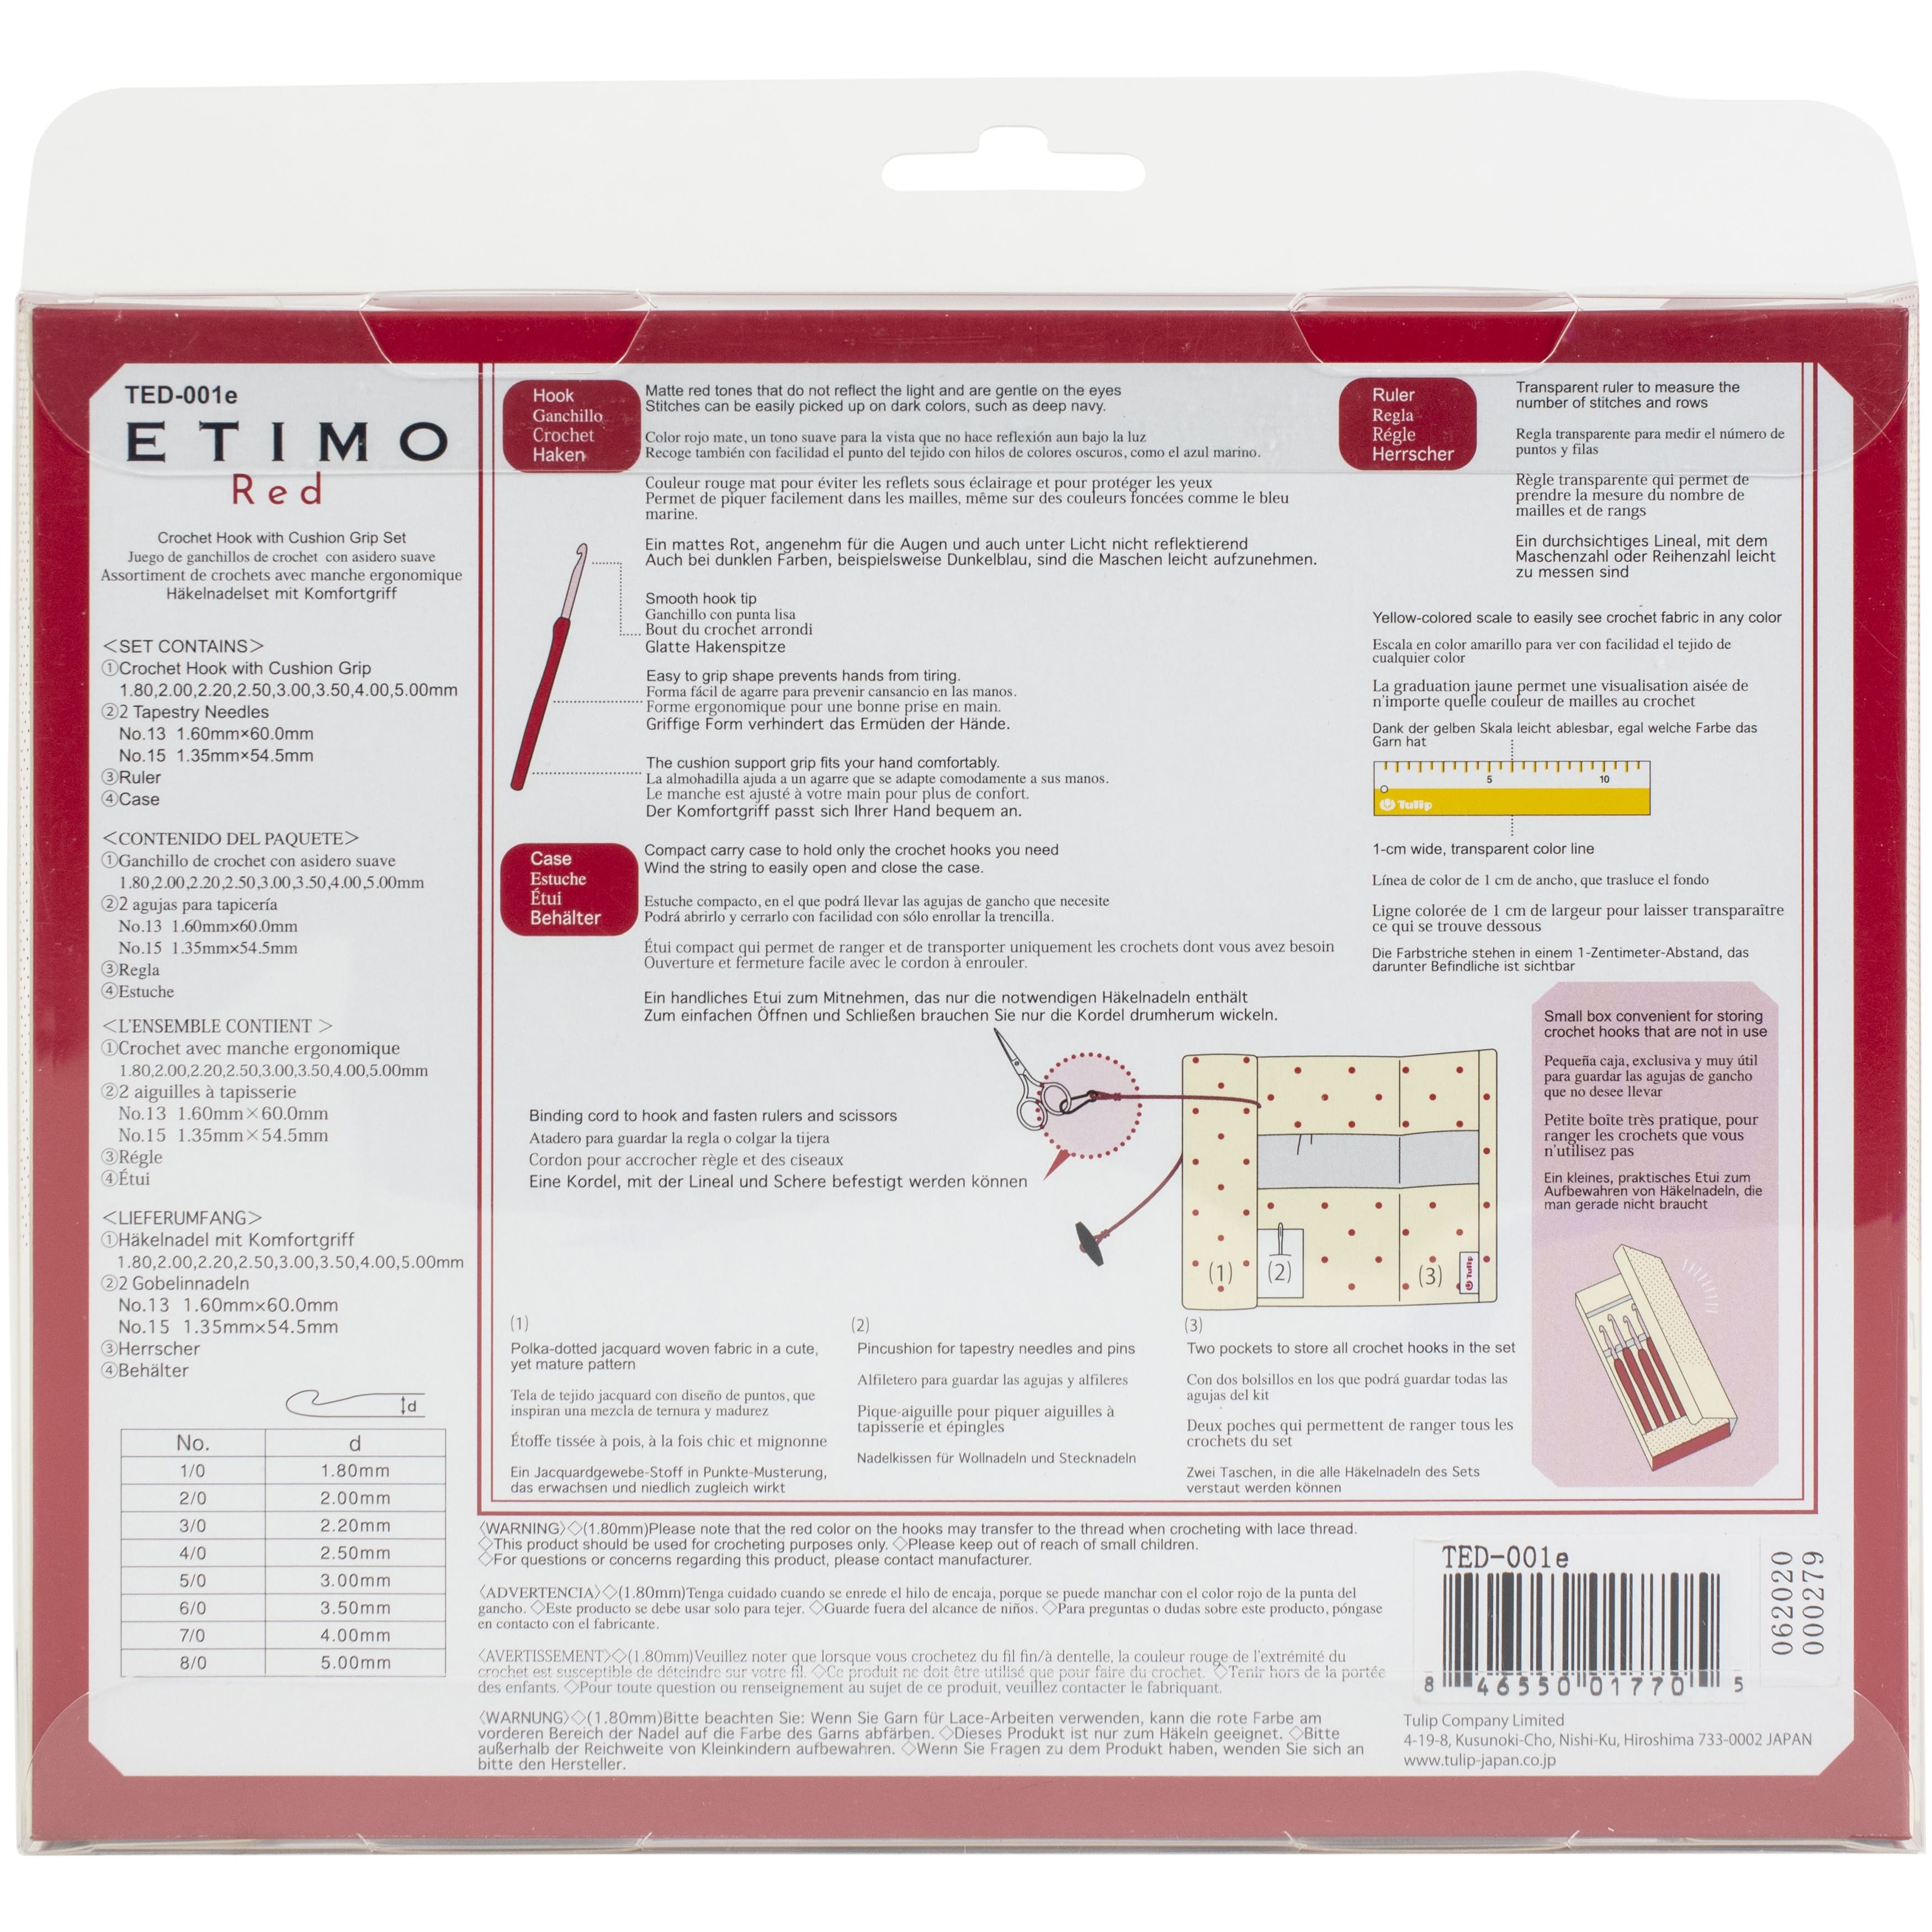 Tulip Etimo Red Crochet Hook W/ Cushion Grip-Size 7/4.00mm